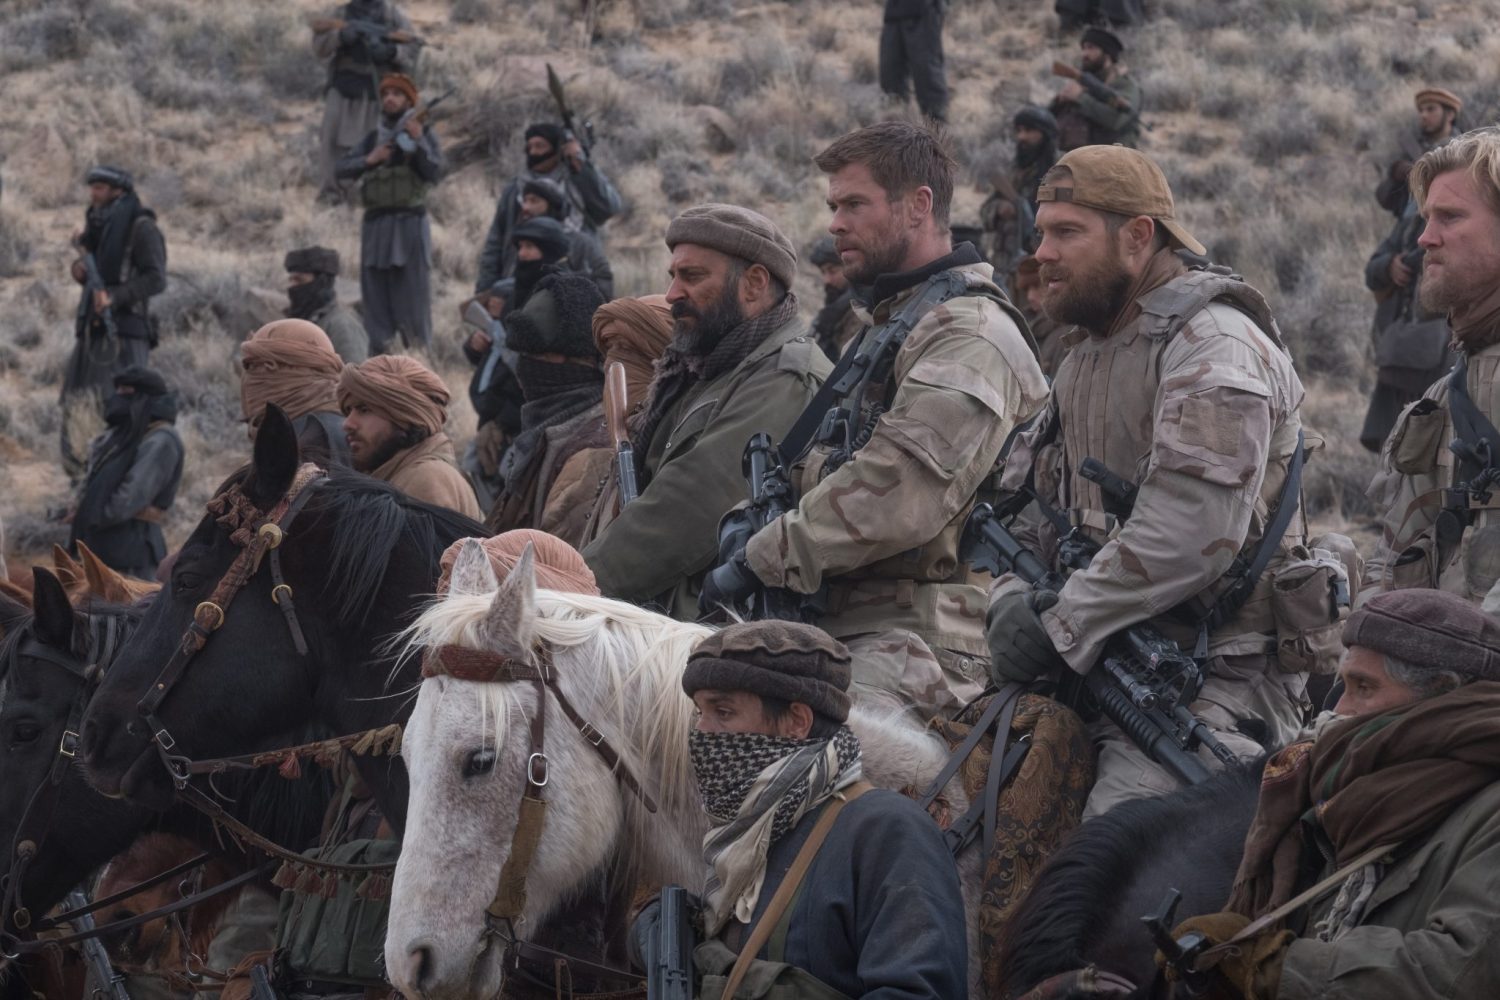 12 Strong Operation 12 Strong Chris Hemsworth Soldaten Kriegsfilm Review Kritik Blu-ray Heimkino Titel Pferde